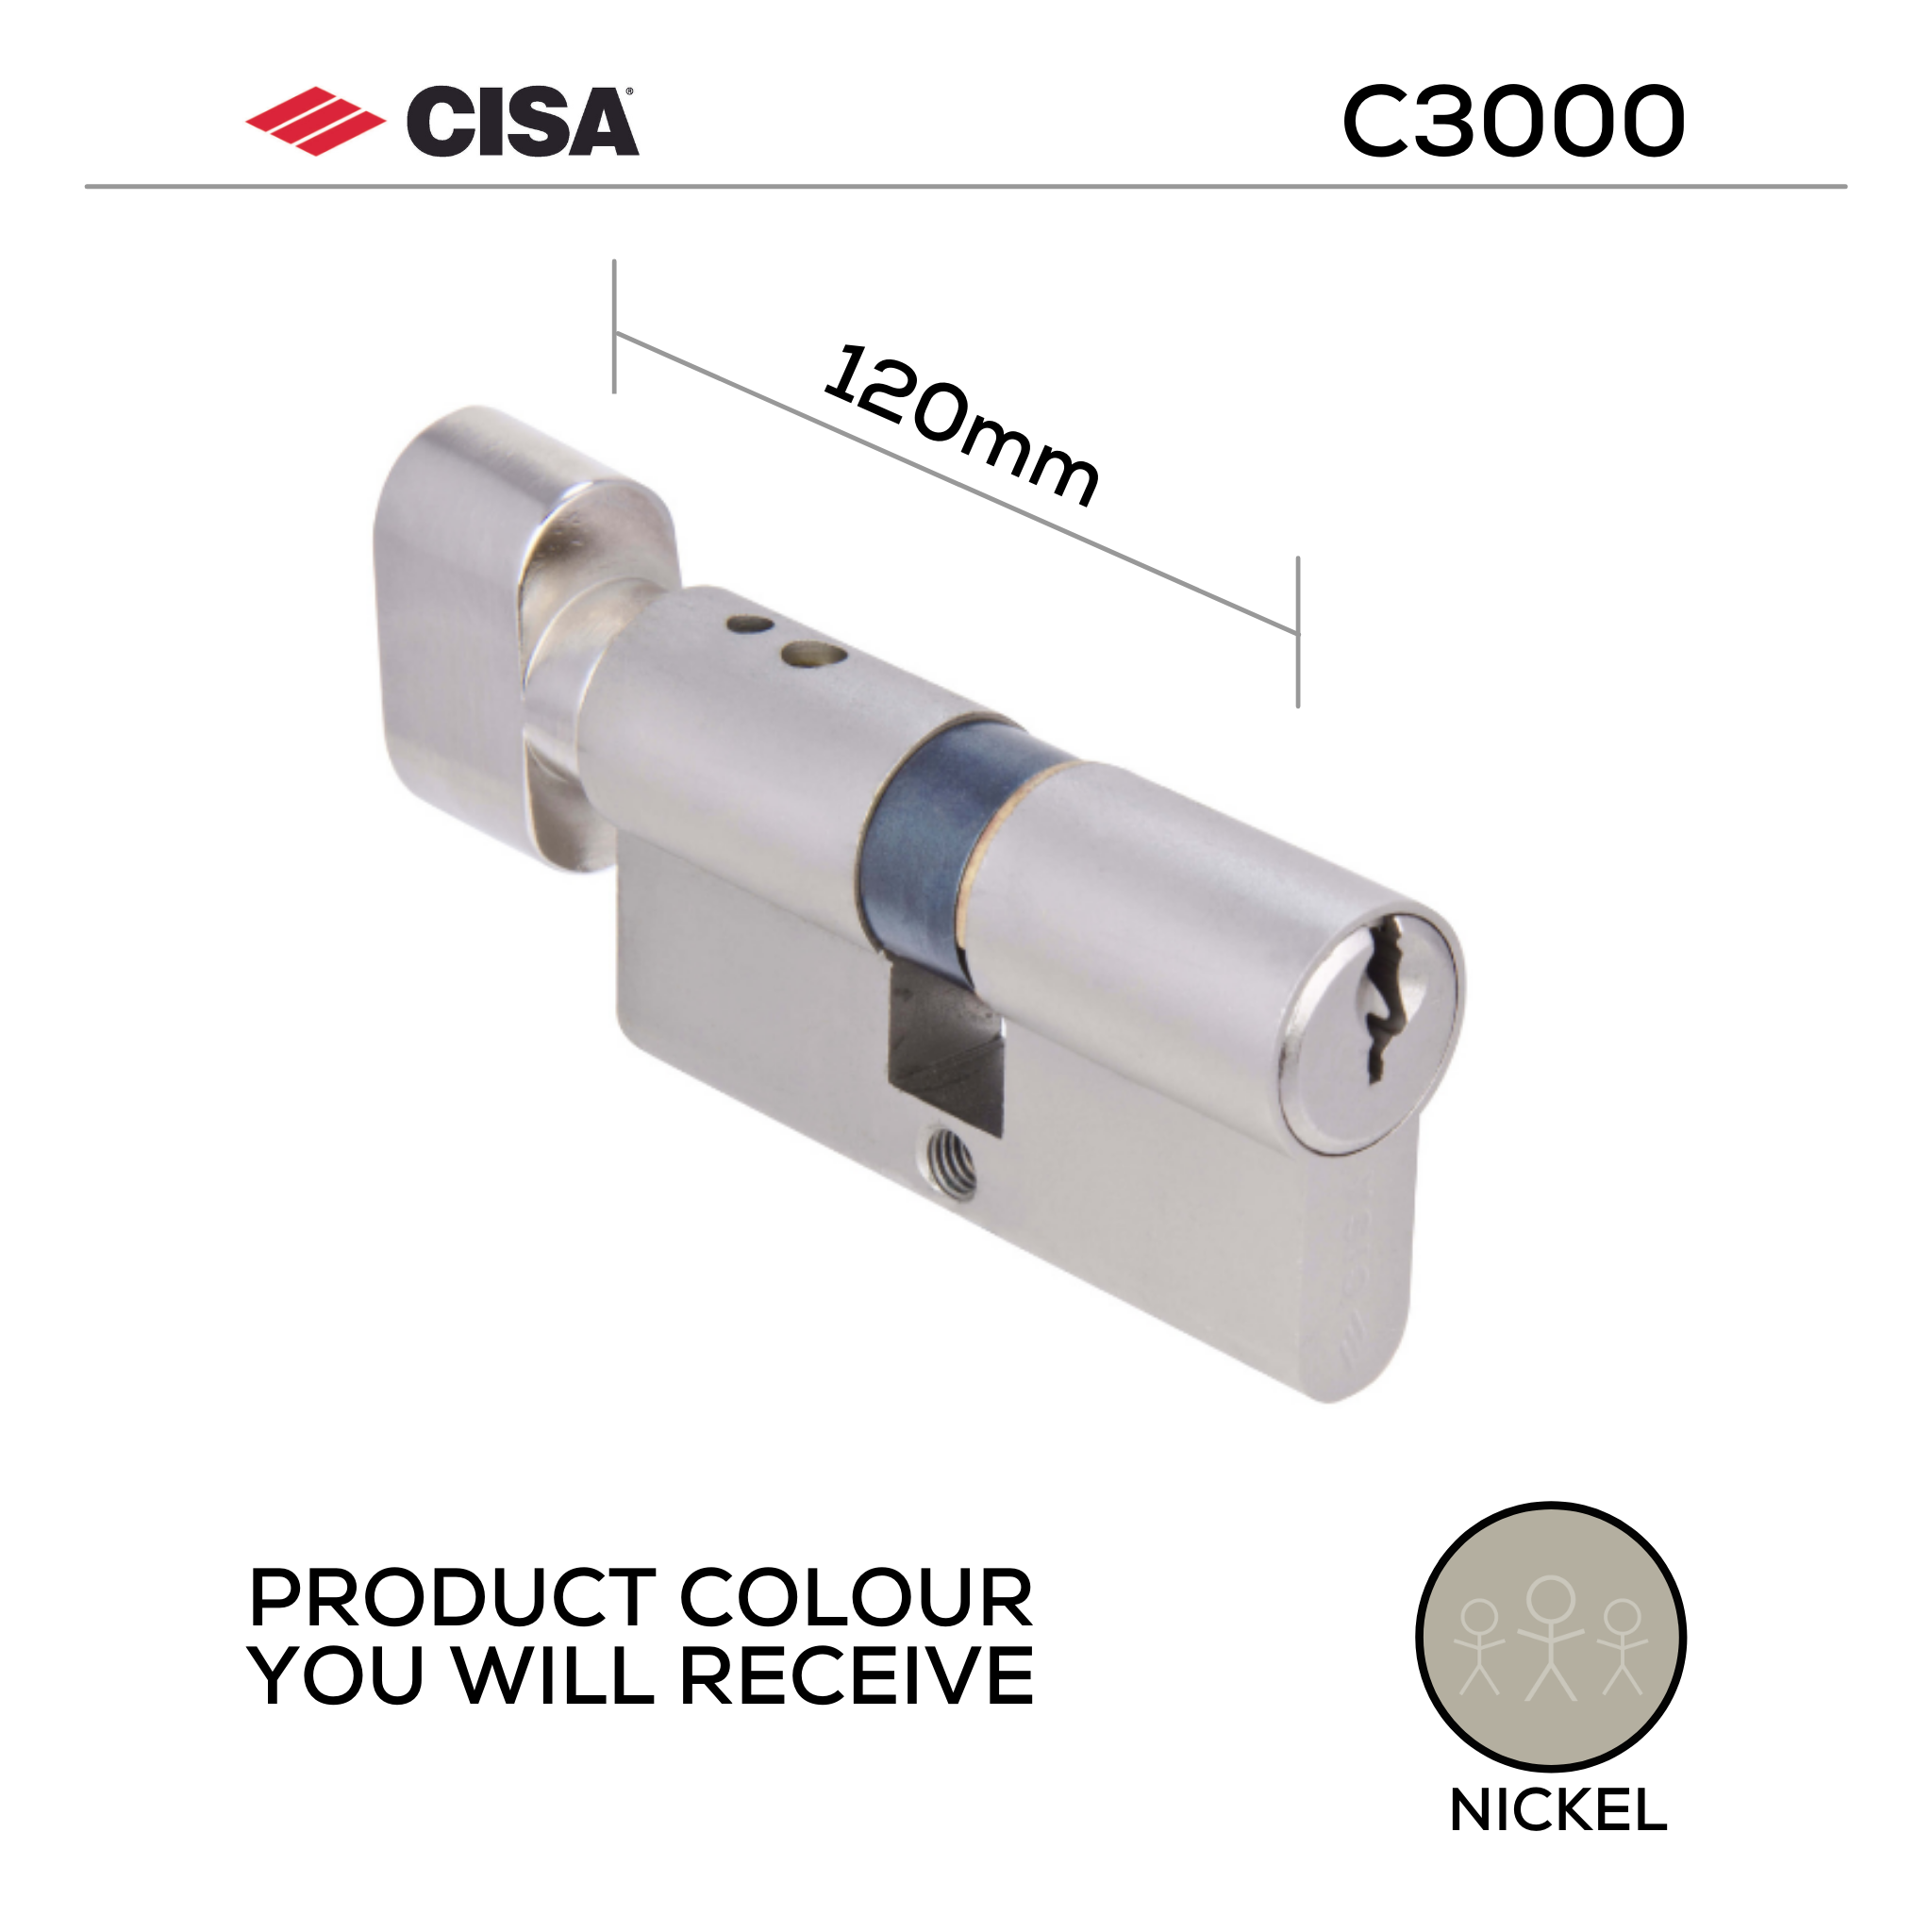 0N317-52-12-KD, 120mm - 89.5/29.5, Double Cylinder, C3000, Thumbturn to Key, Keyed to Differ (Standard), 3 Keys, 6 Pin, Nickel, CISA